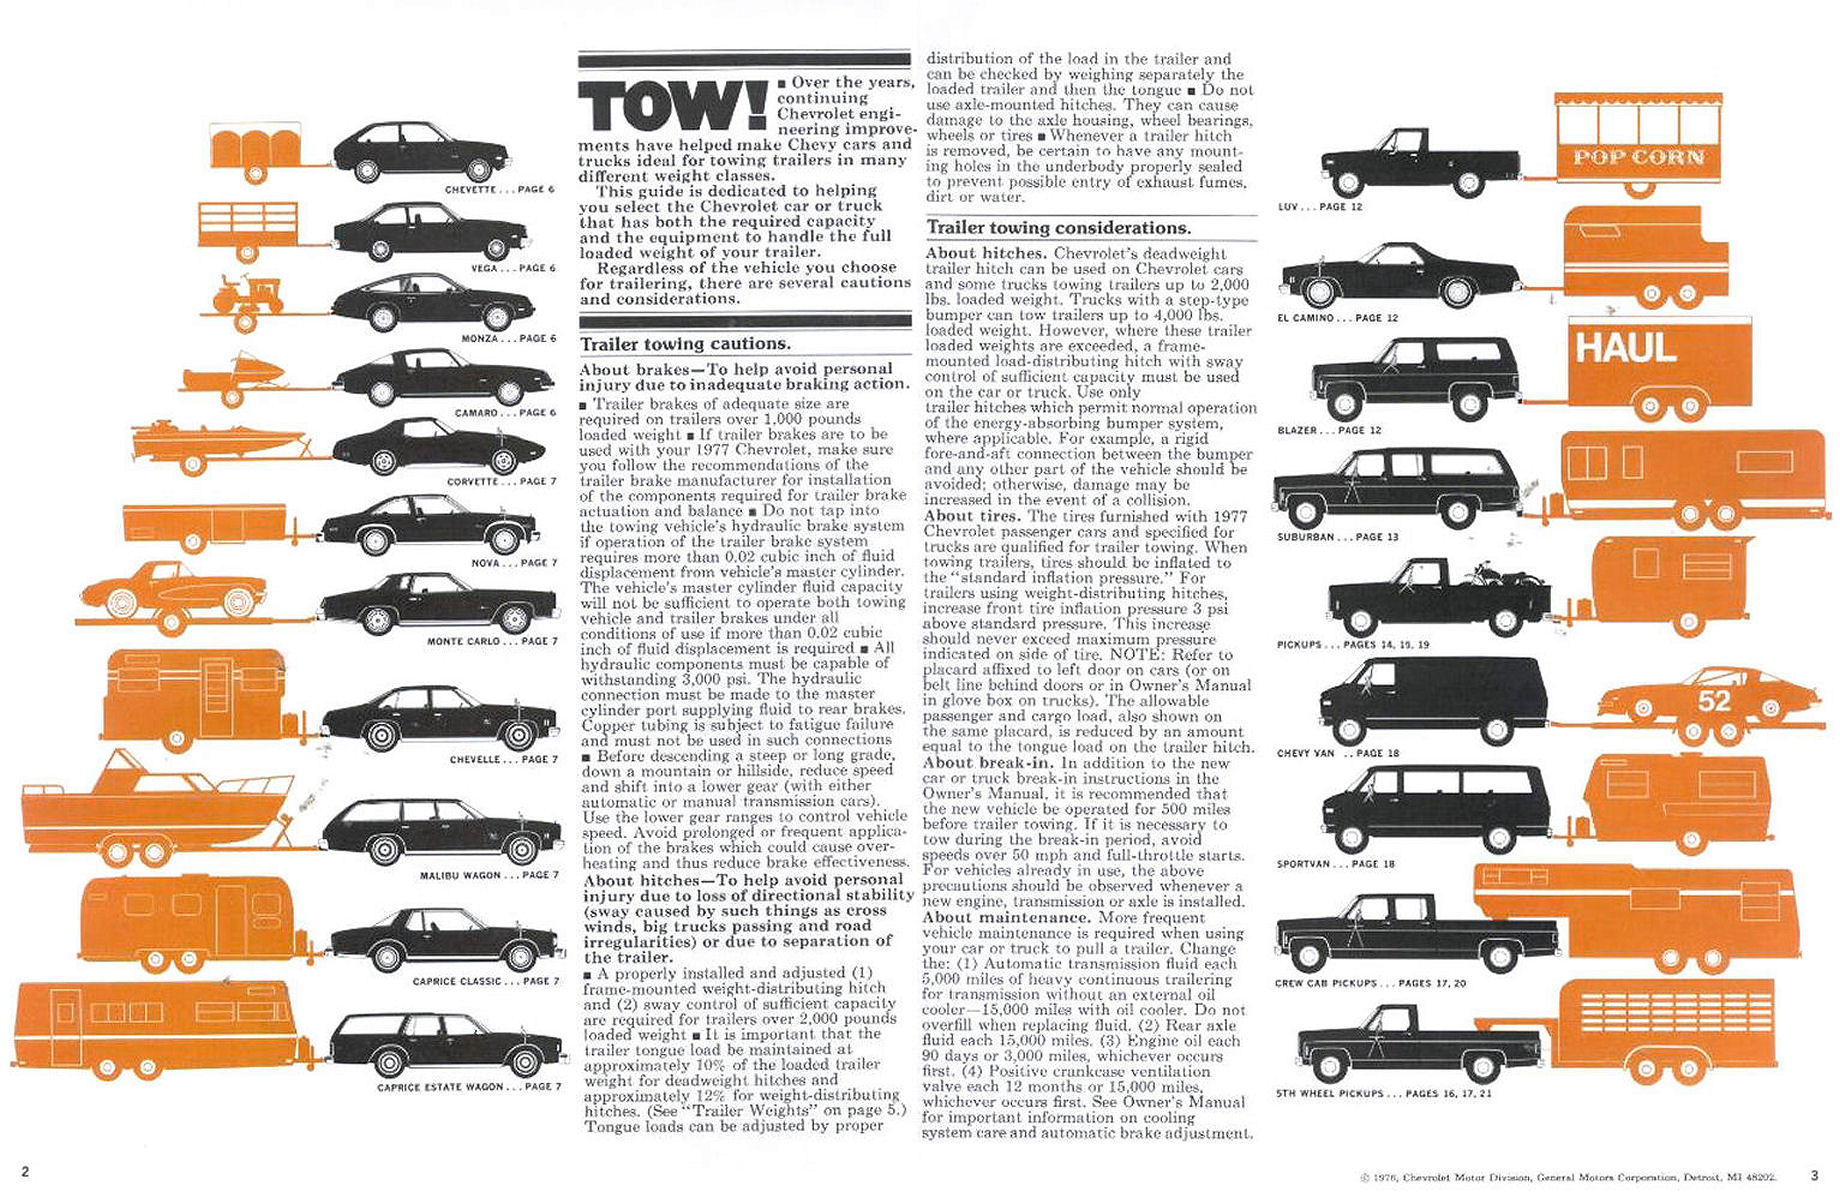 1977_Chevrolet_Trailering_Guide-02-03